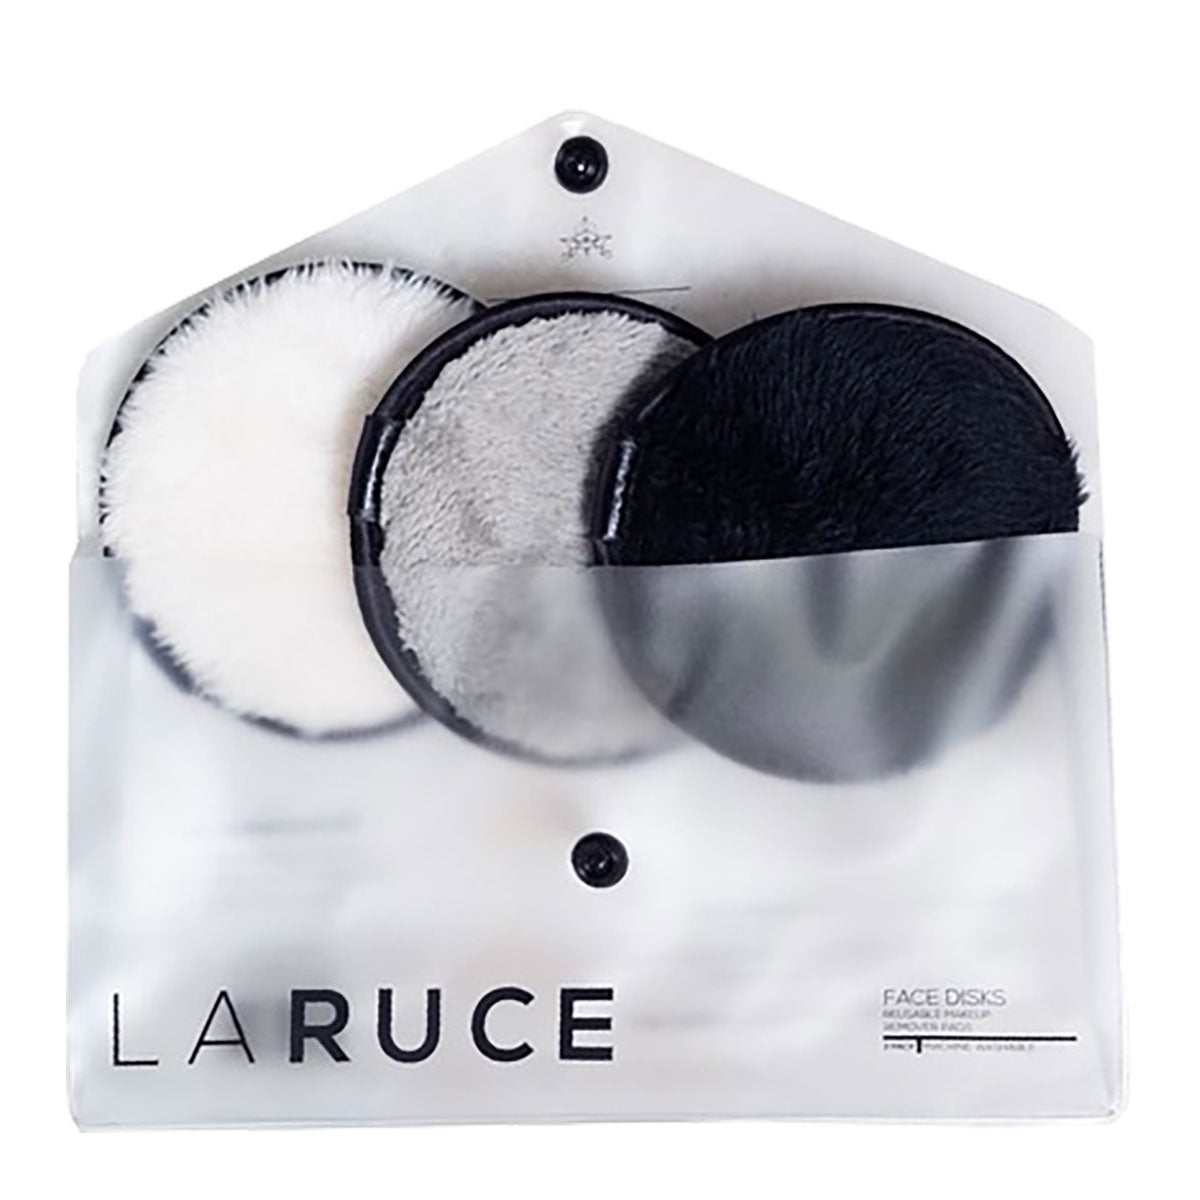 Laruce Face Disks Reusable Makeup Remover Pads 3 Pack